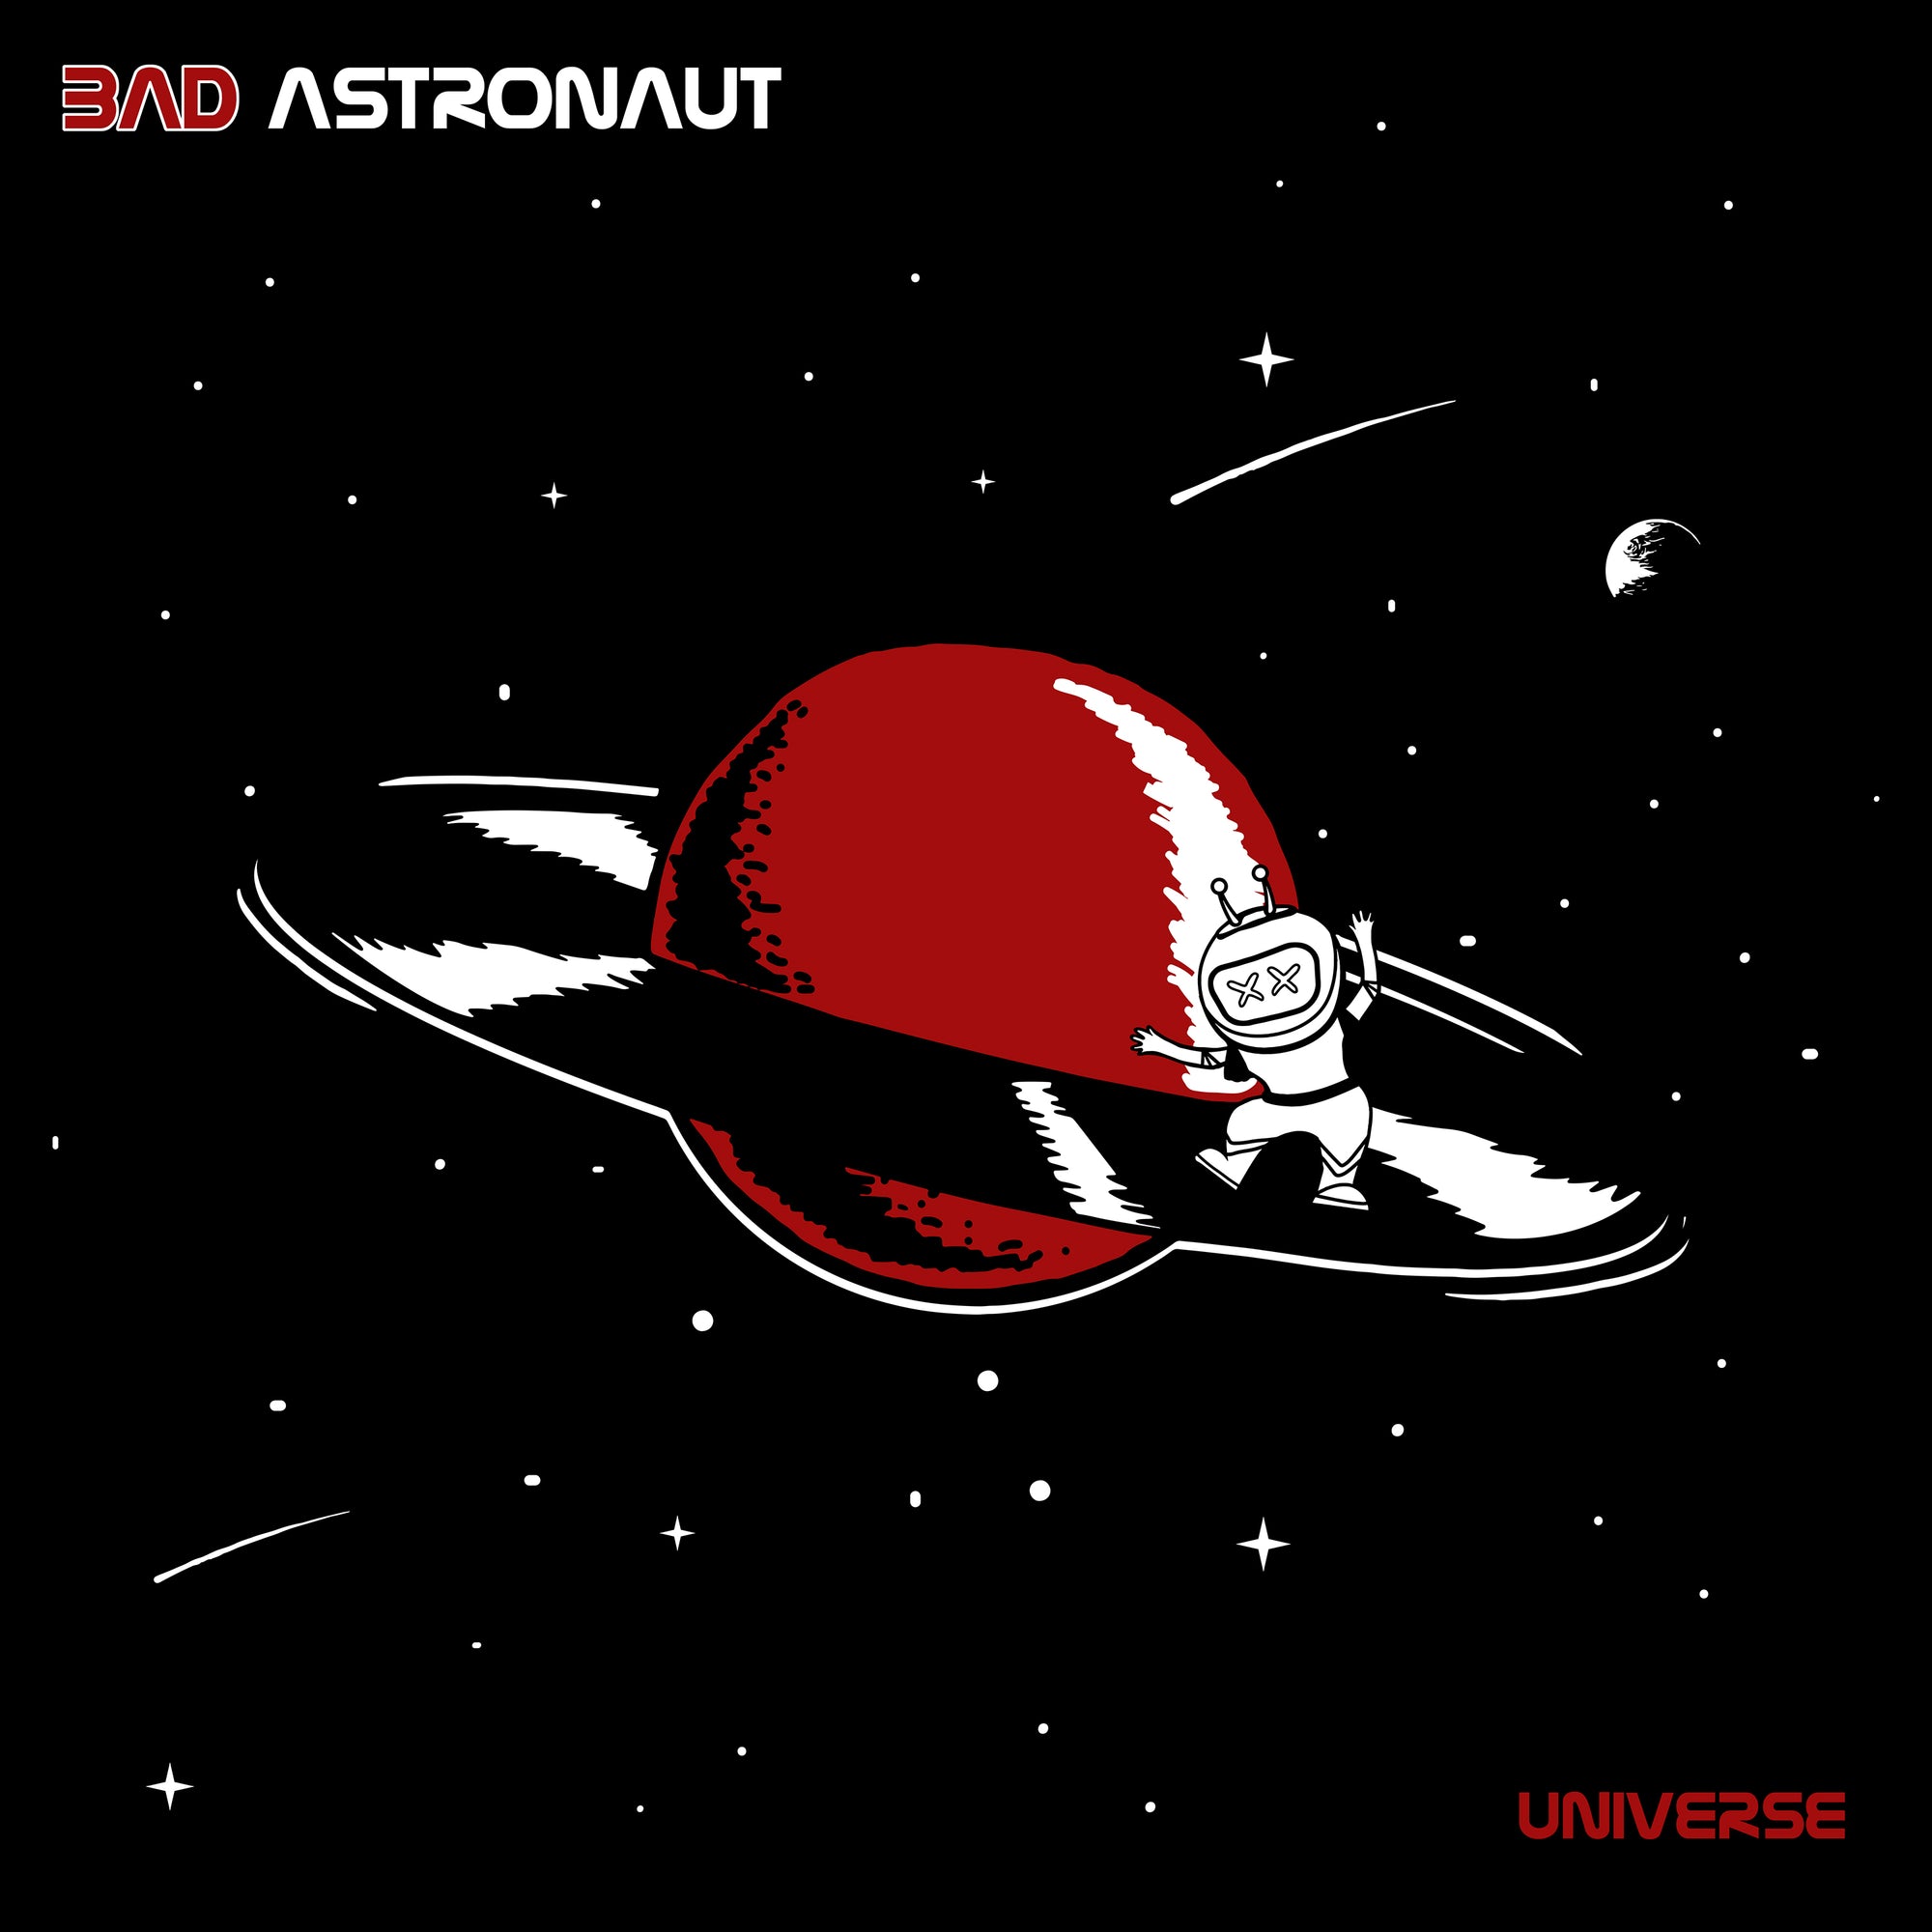 Bad Astronaut - Universe (BOX SET)